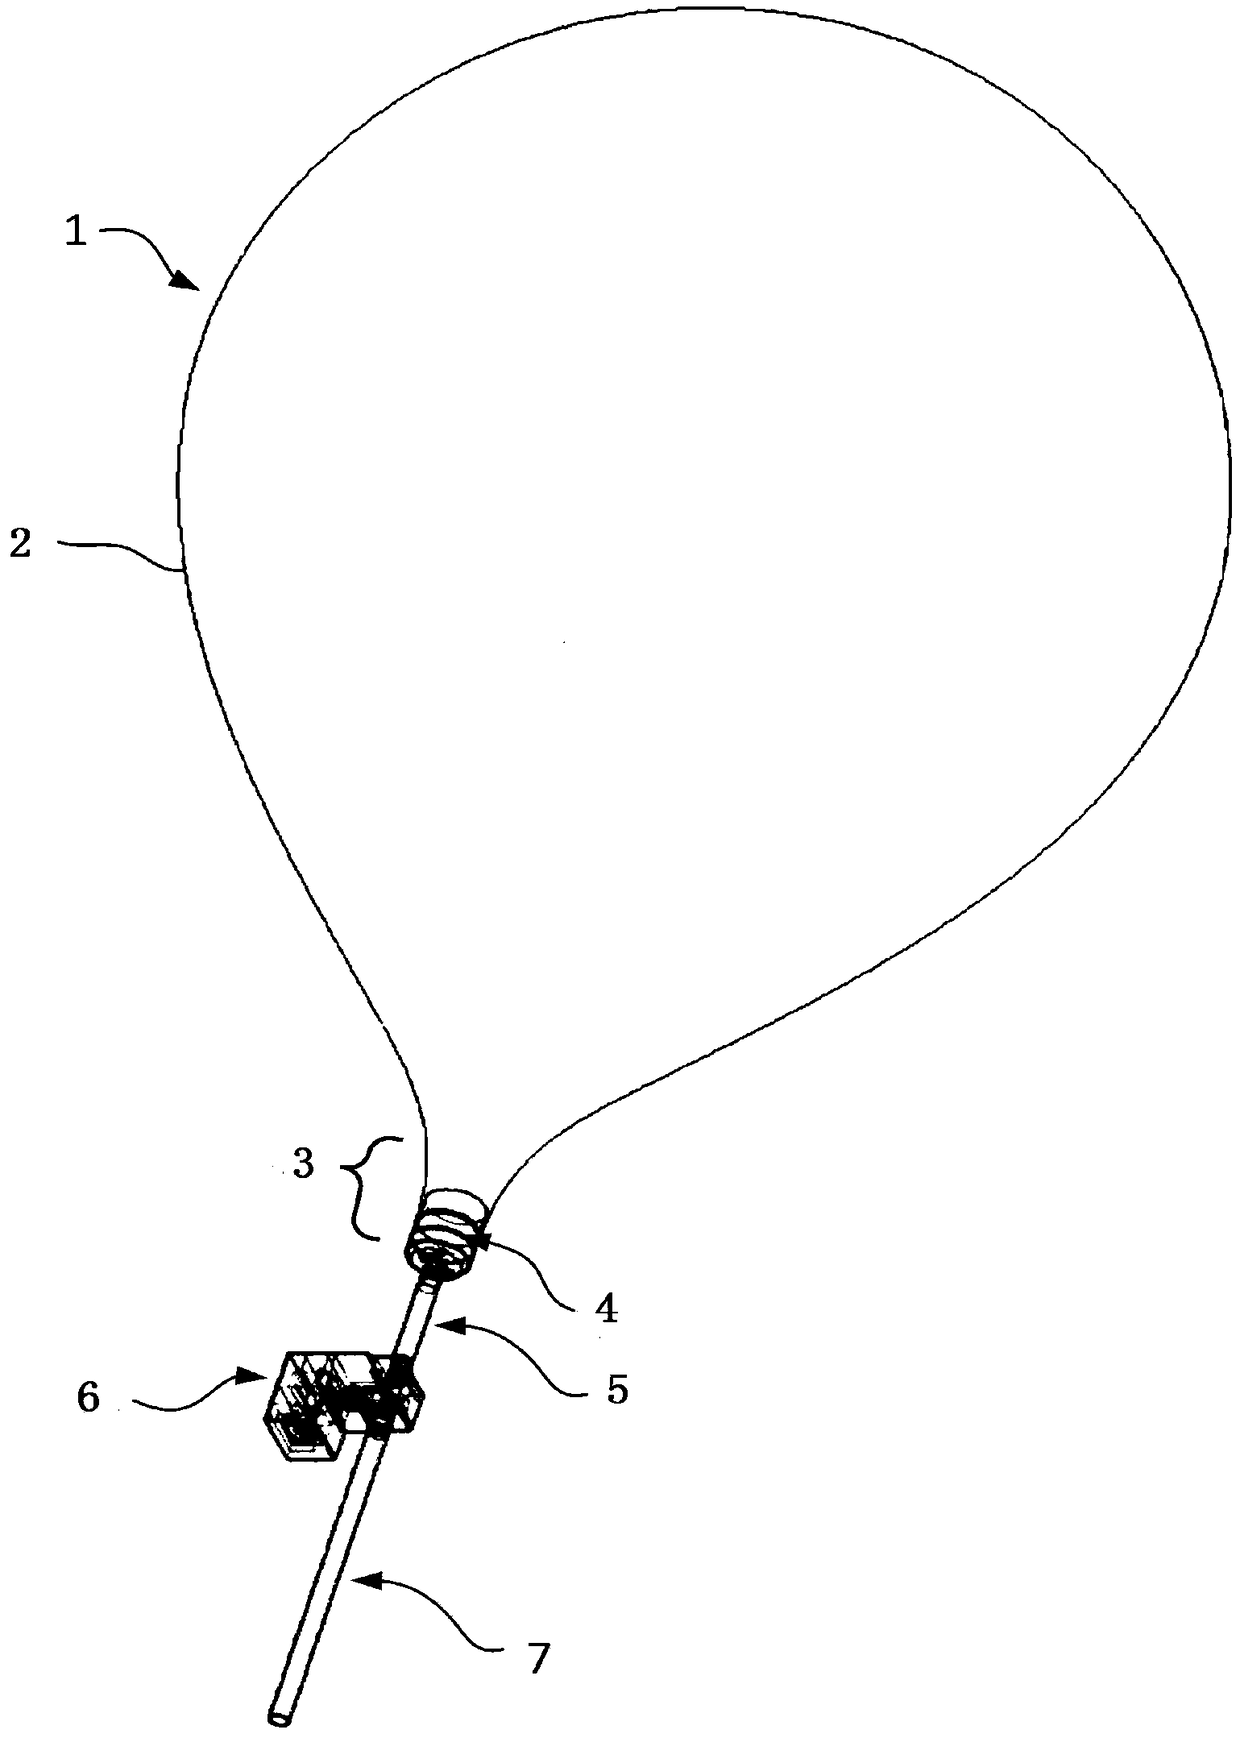 High-altitude latex horizontal moving sounding balloon